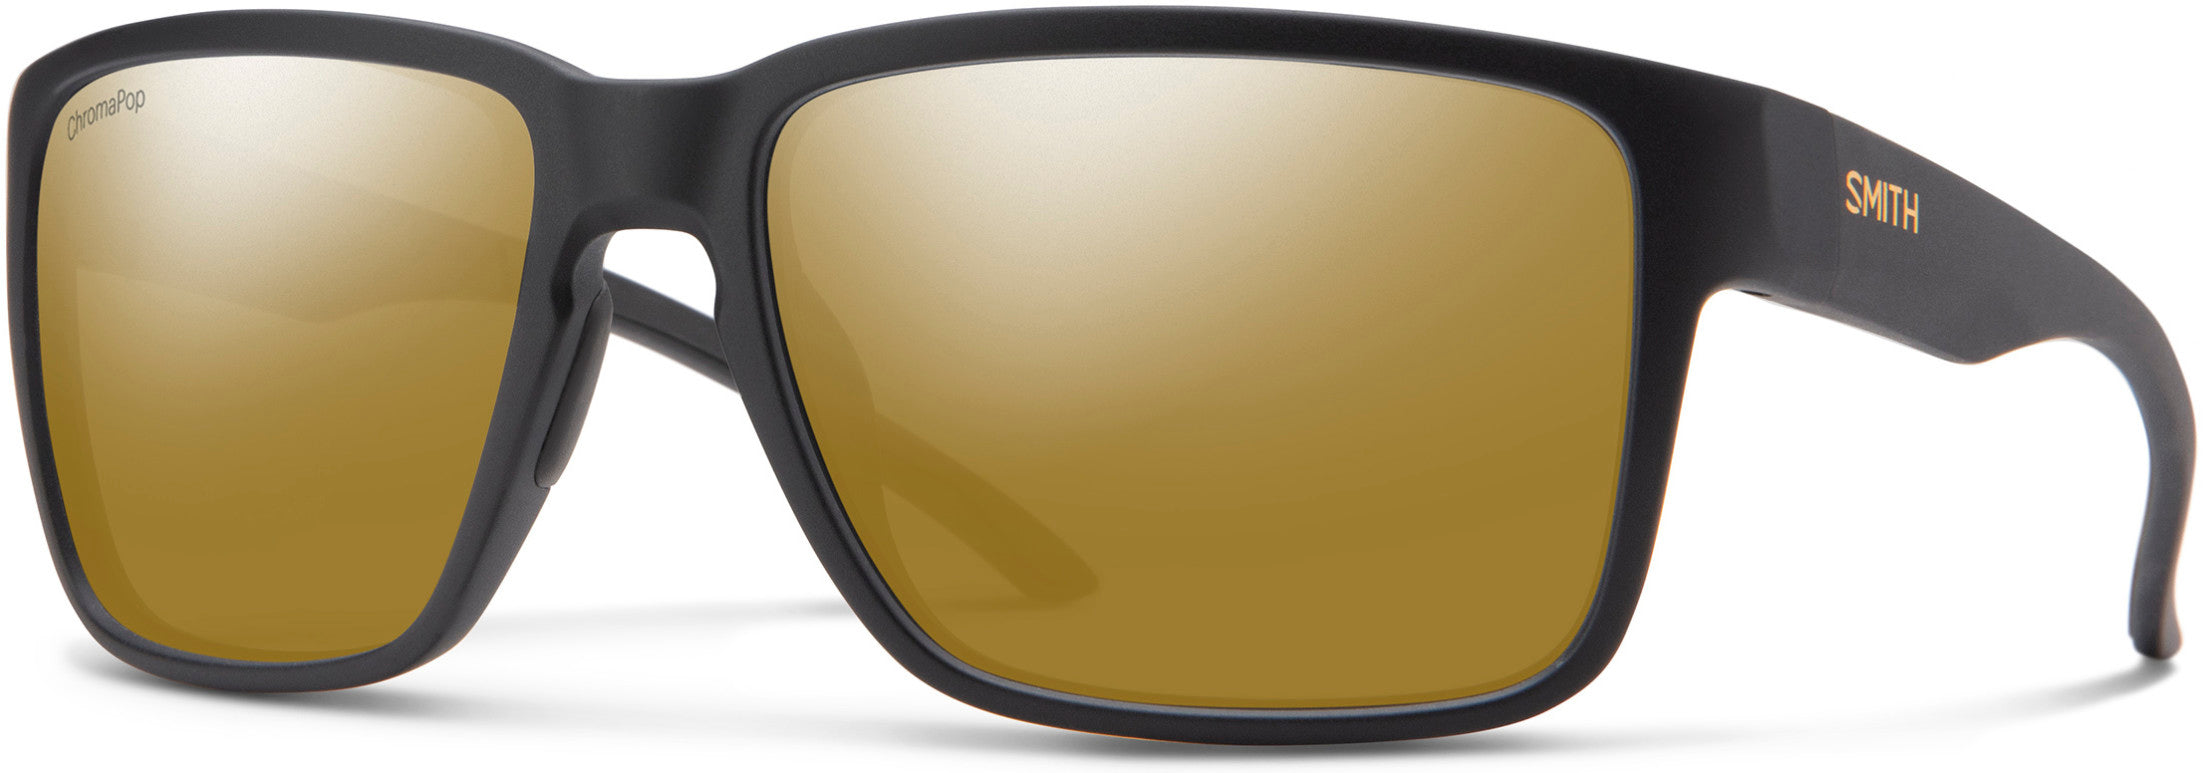 Smith Emerge Rectangular Sunglasses 0I46-0I46  Black Gold (QE Bronze Sp CP Pz)